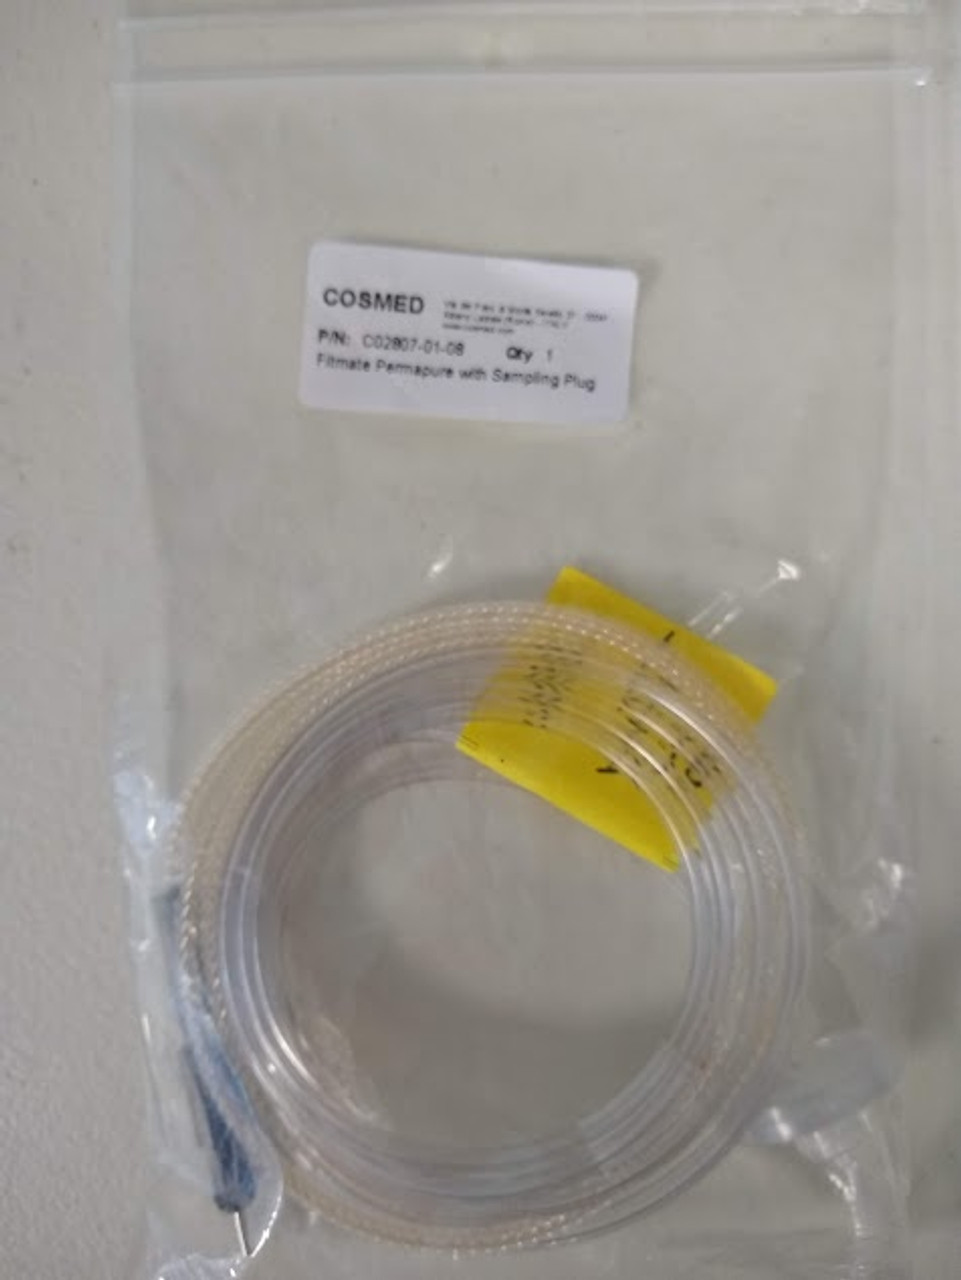 Fitmate Permapure with sampling plug